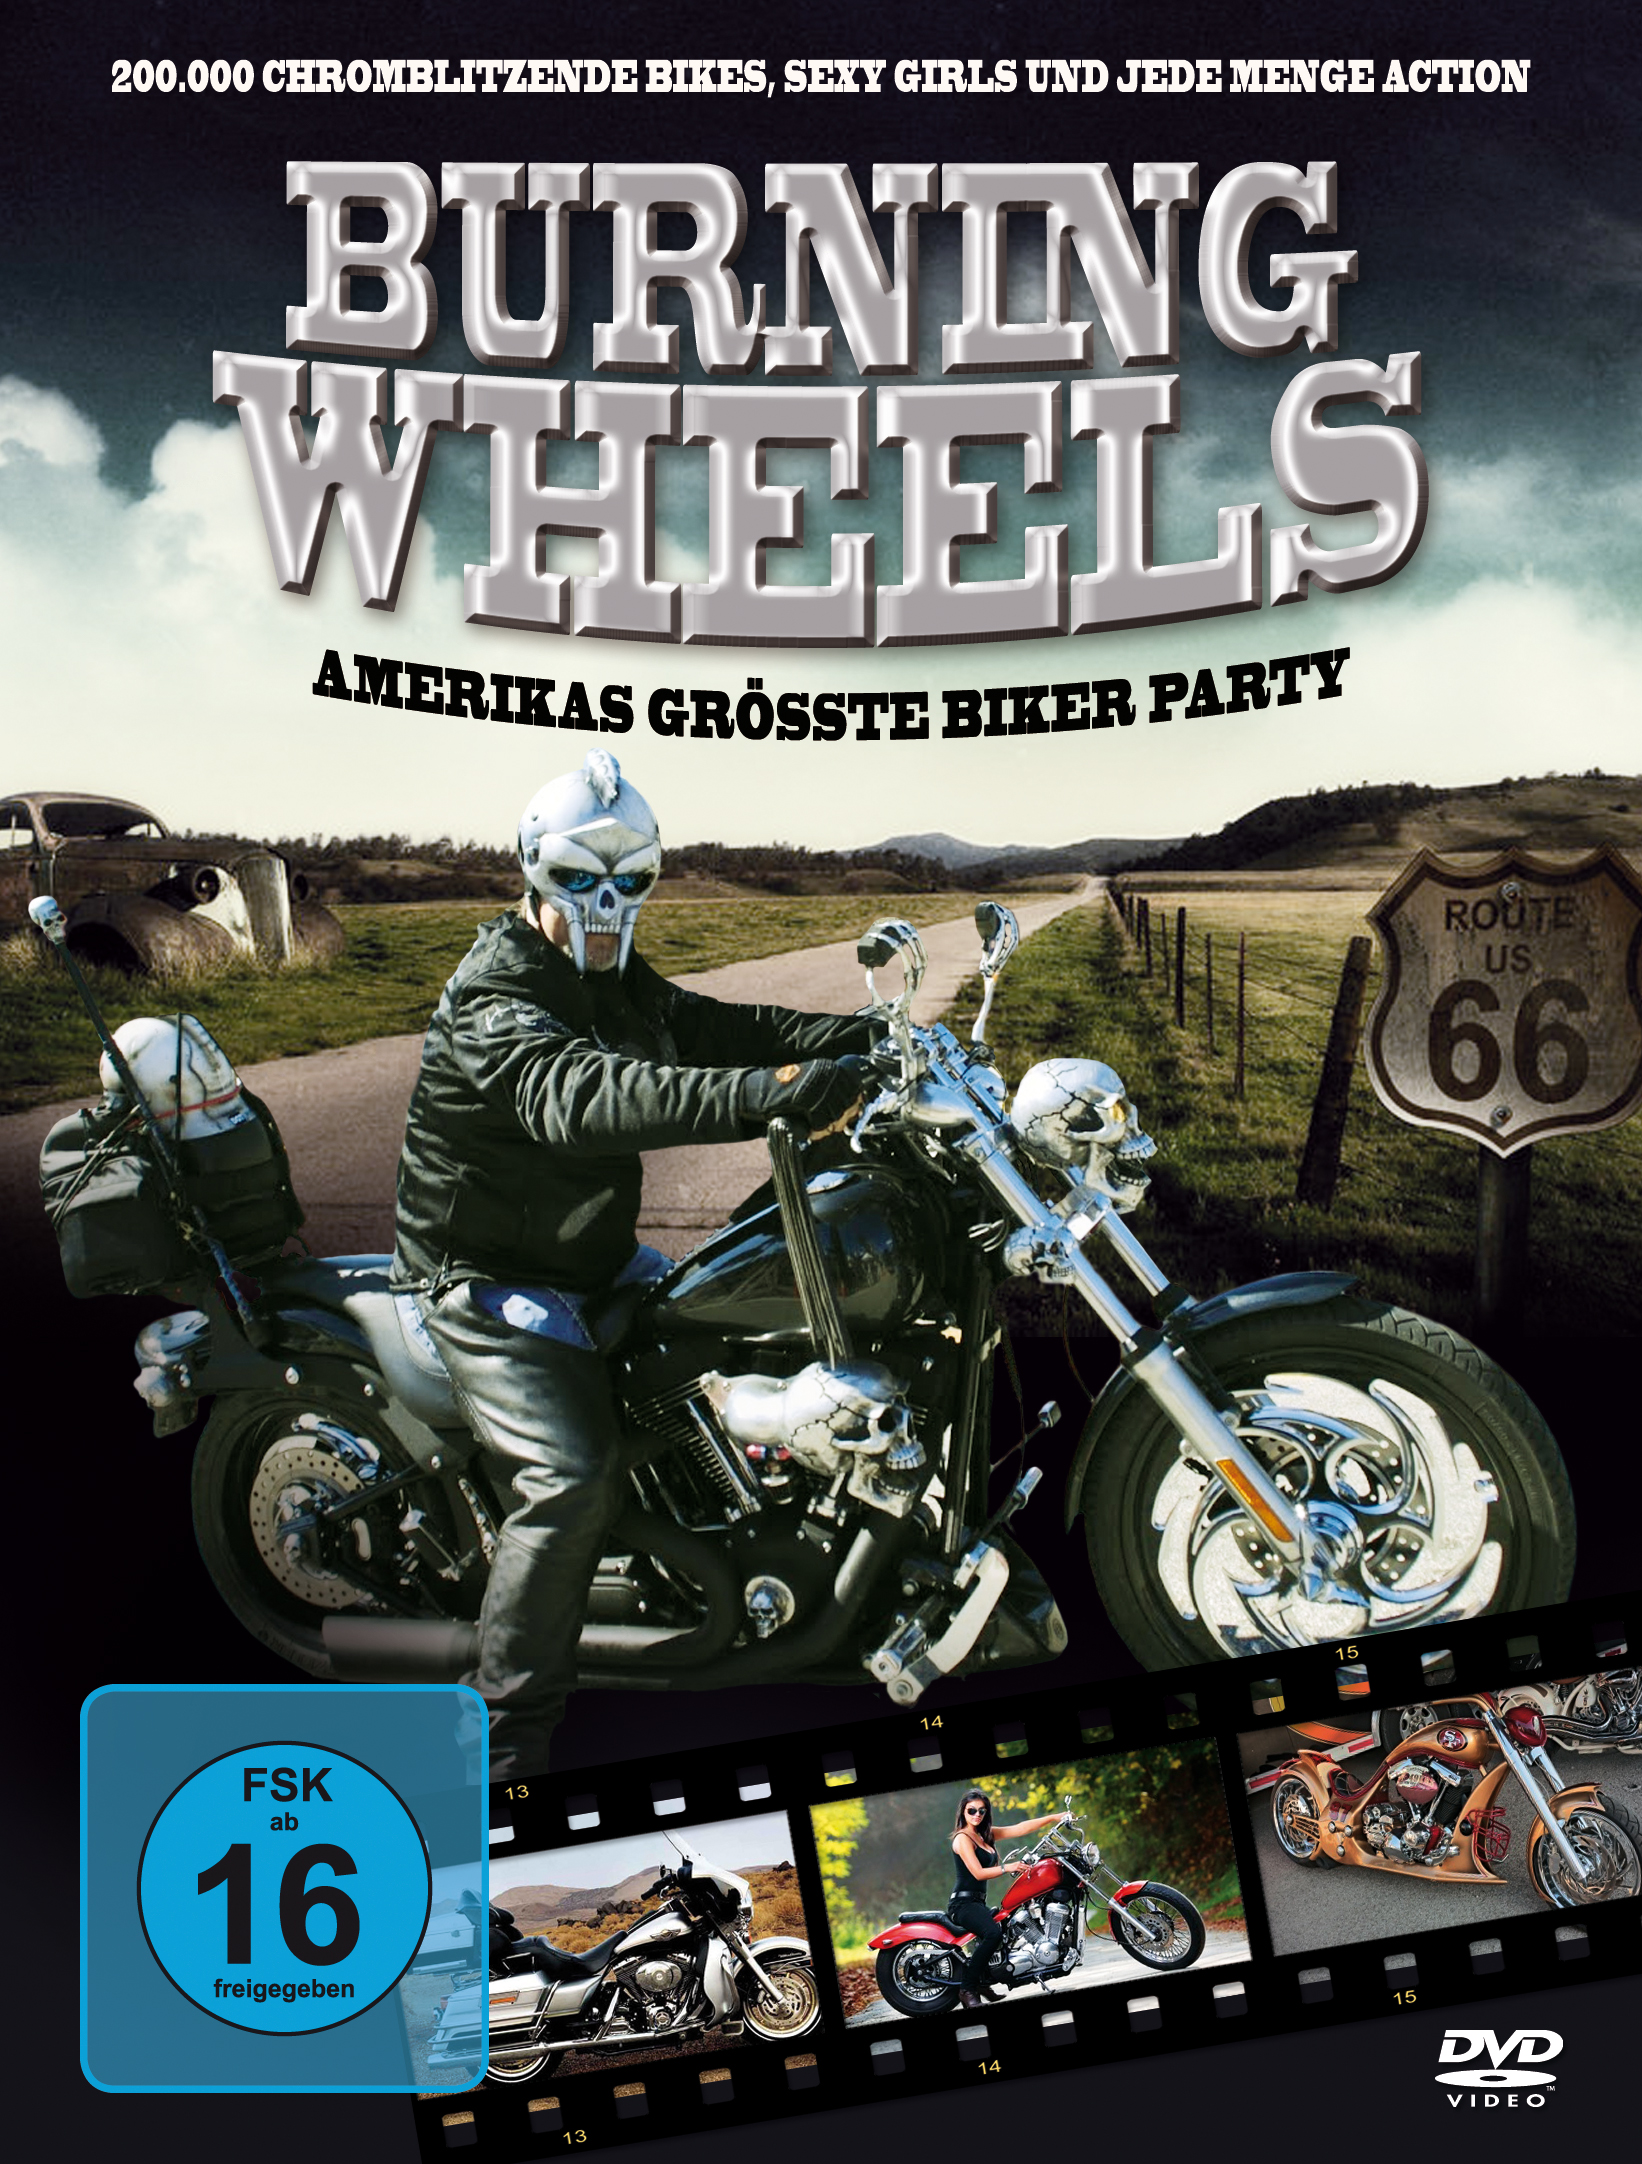 Burning Wheels - Amerikas größte DVD Party Biker